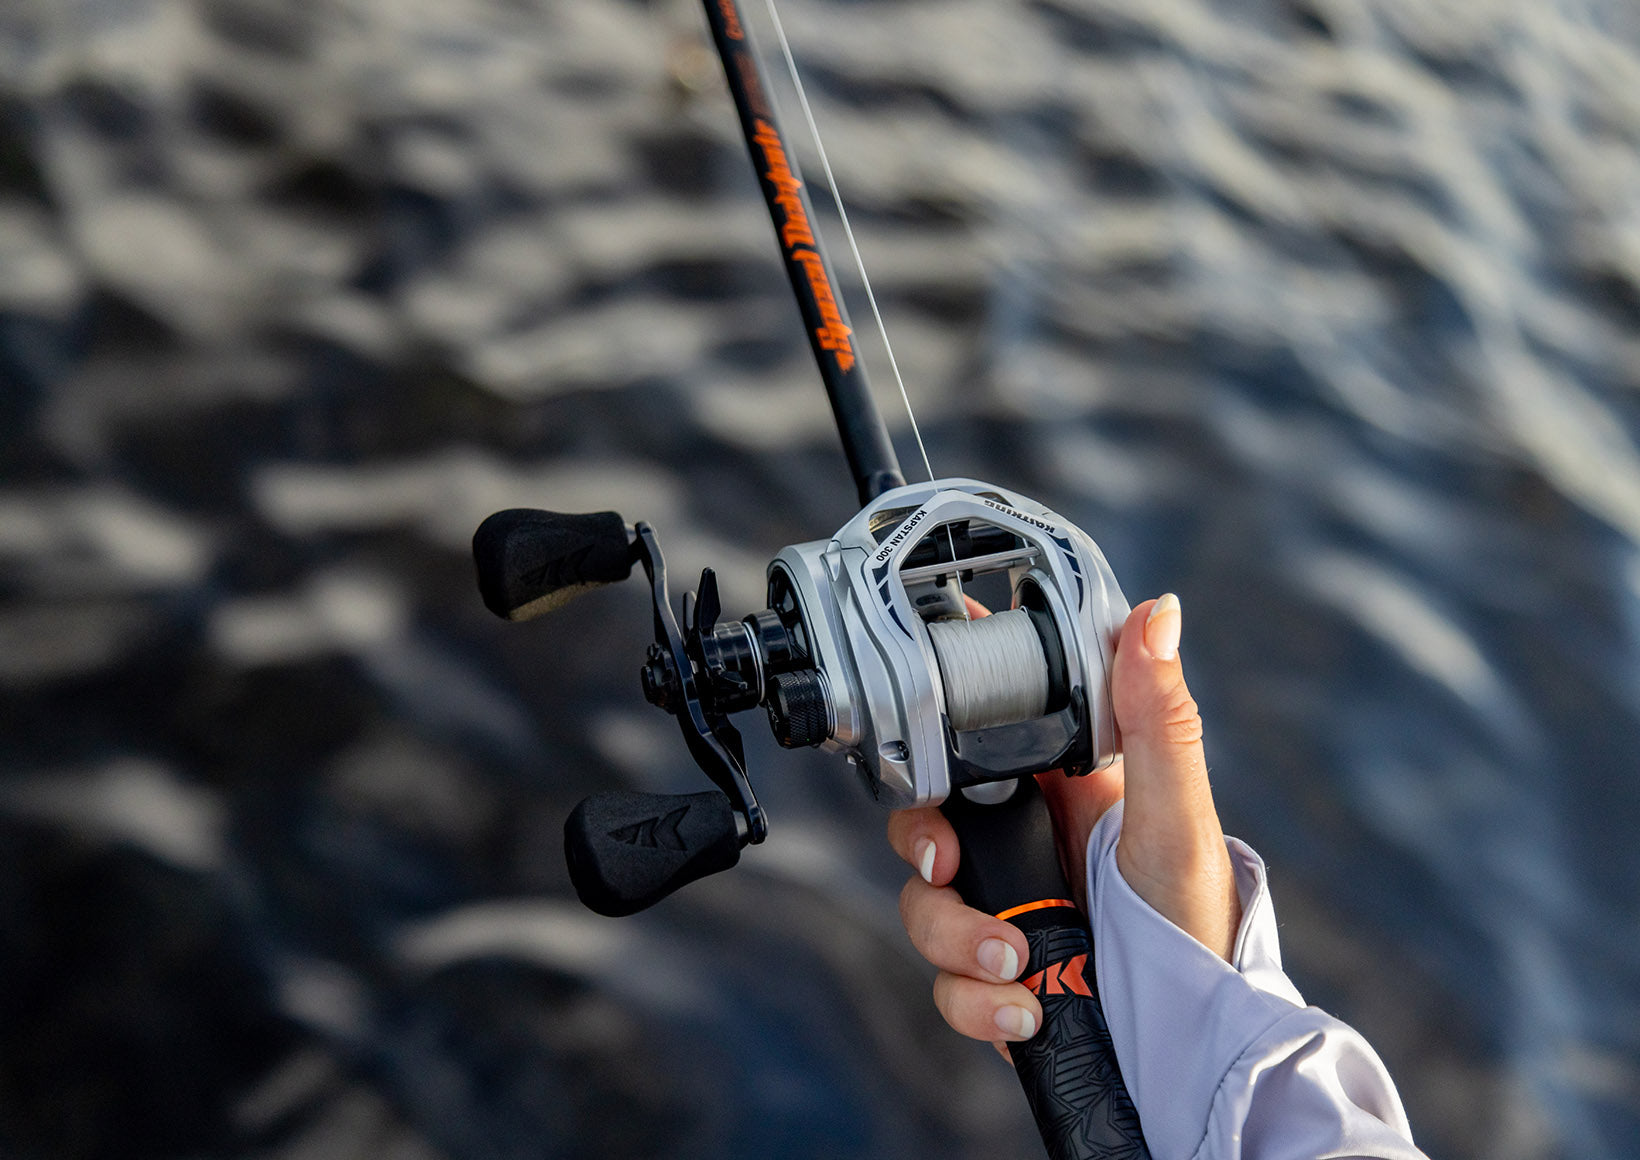 The Best Saltwater Fishing Gear Combo For Starters – KastKing